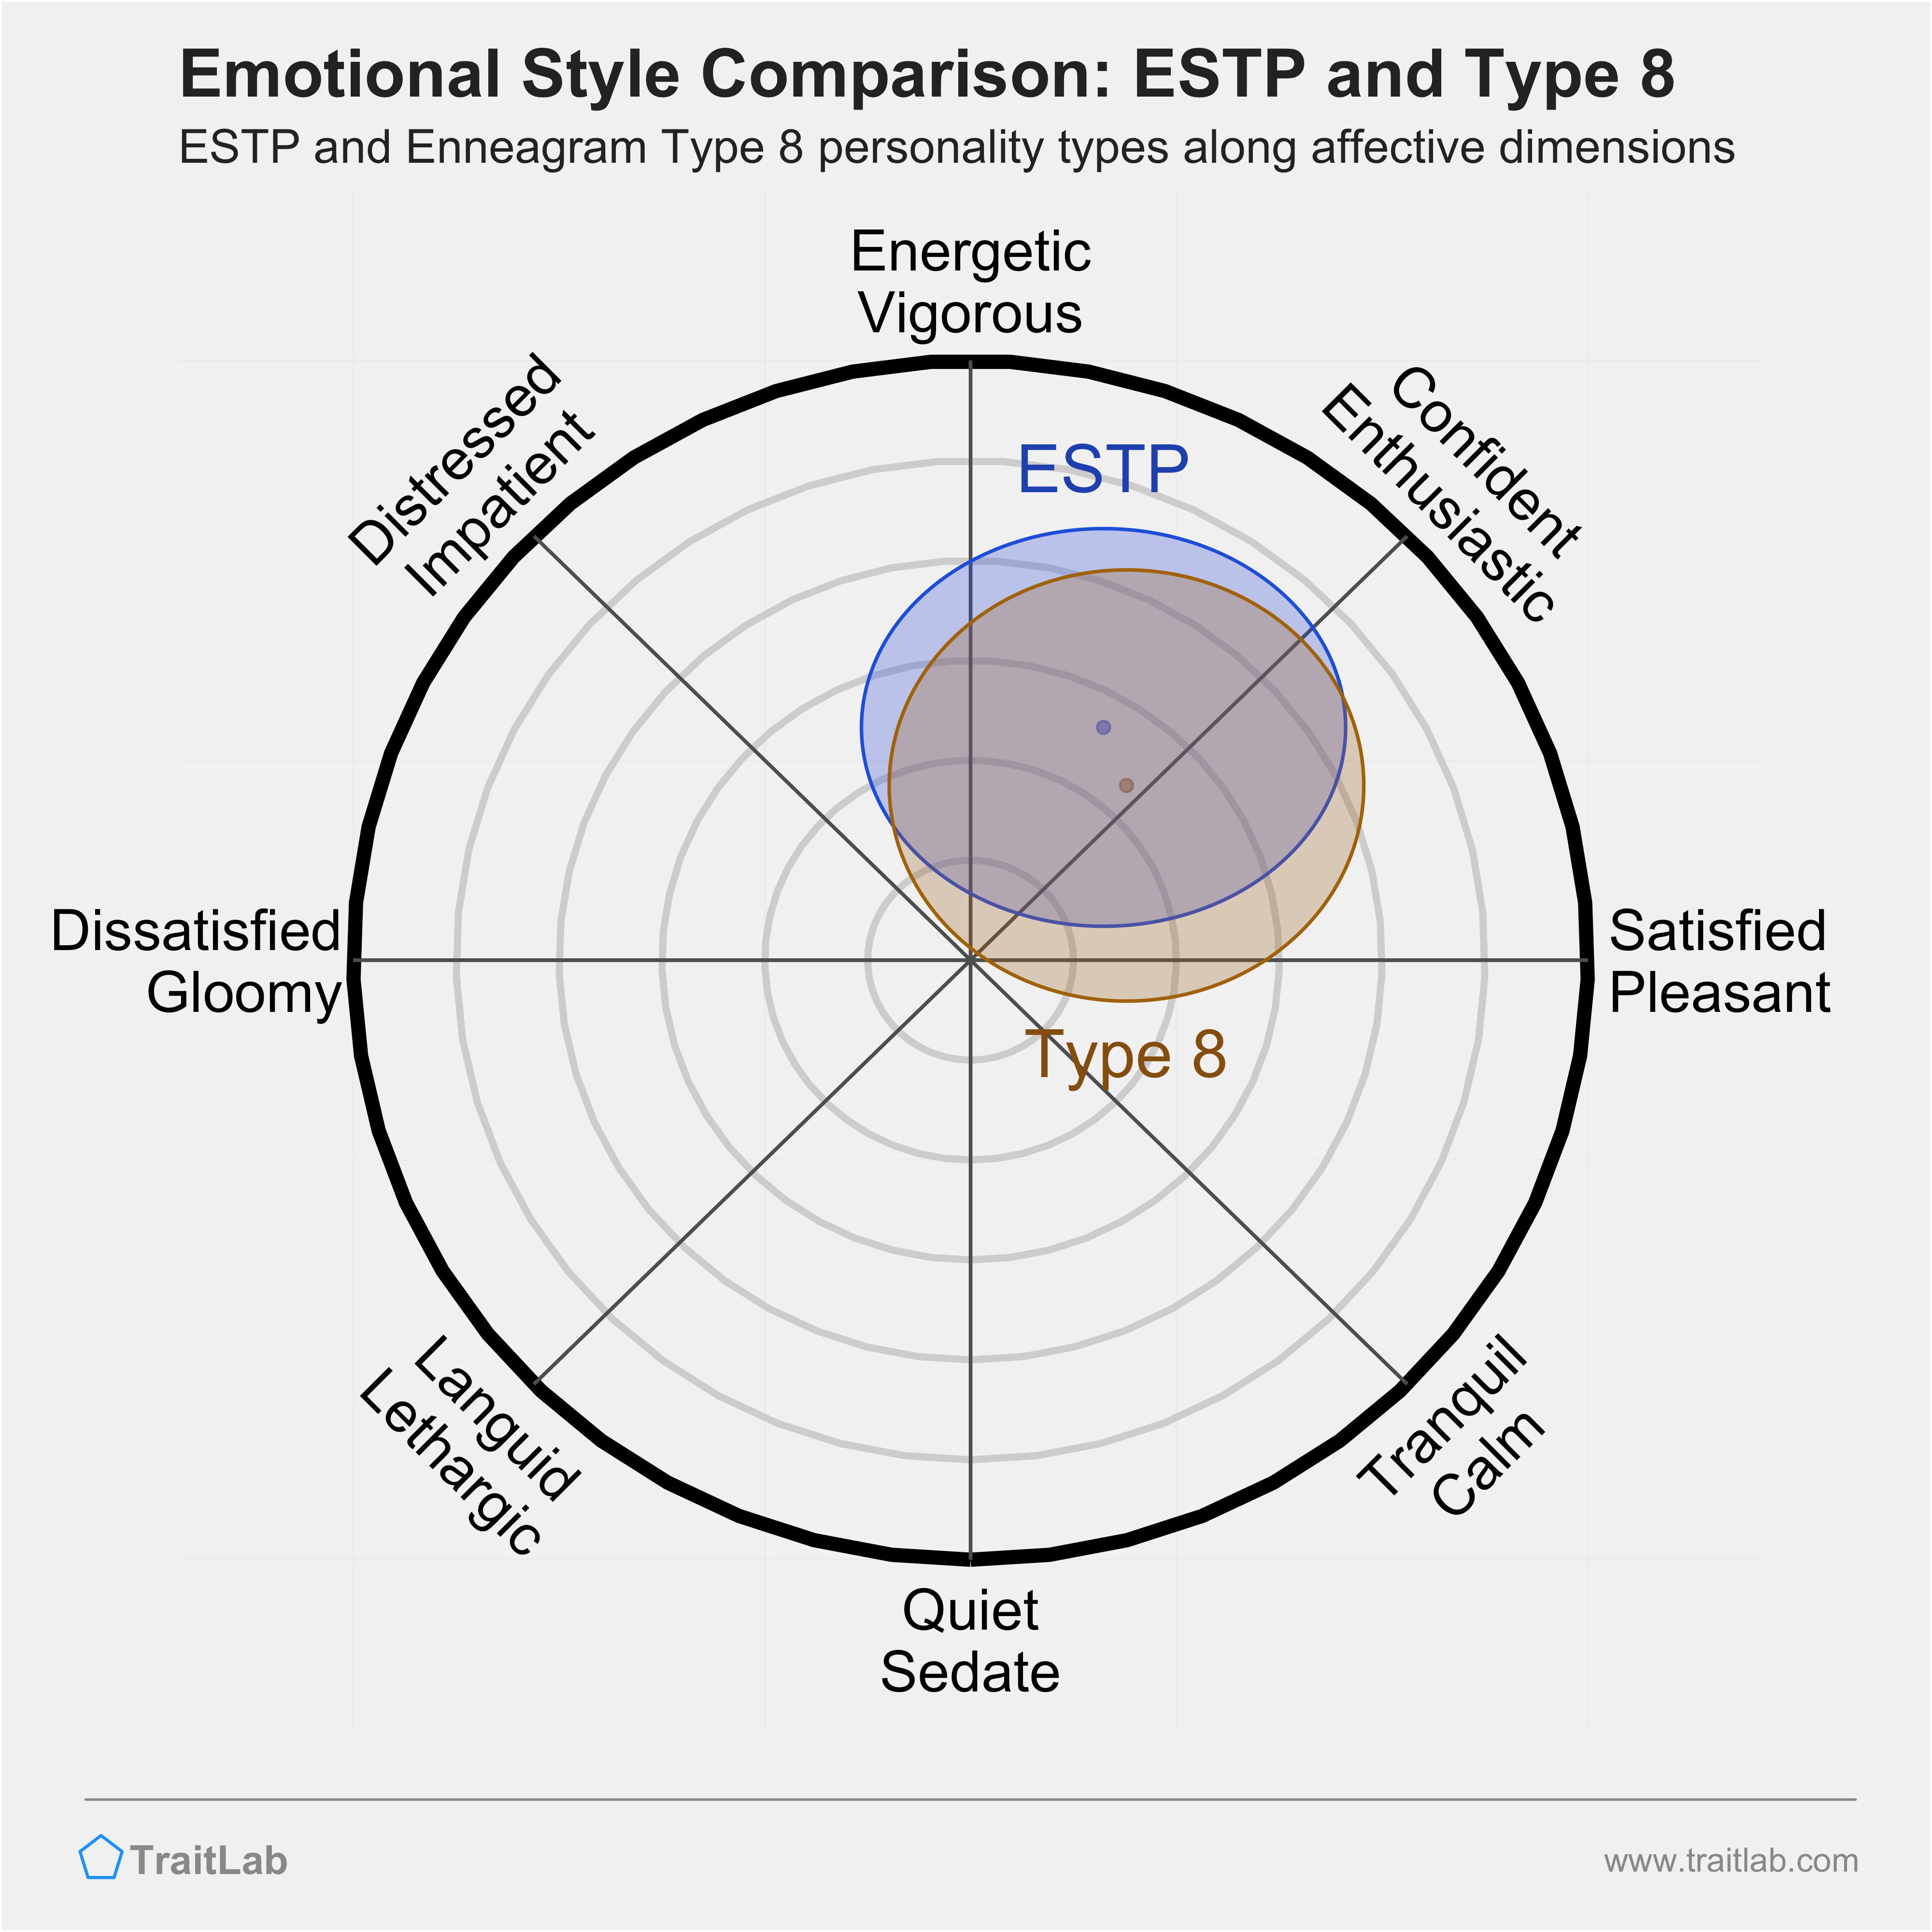 ESTP and Type 8 comparison across emotional (affective) dimensions